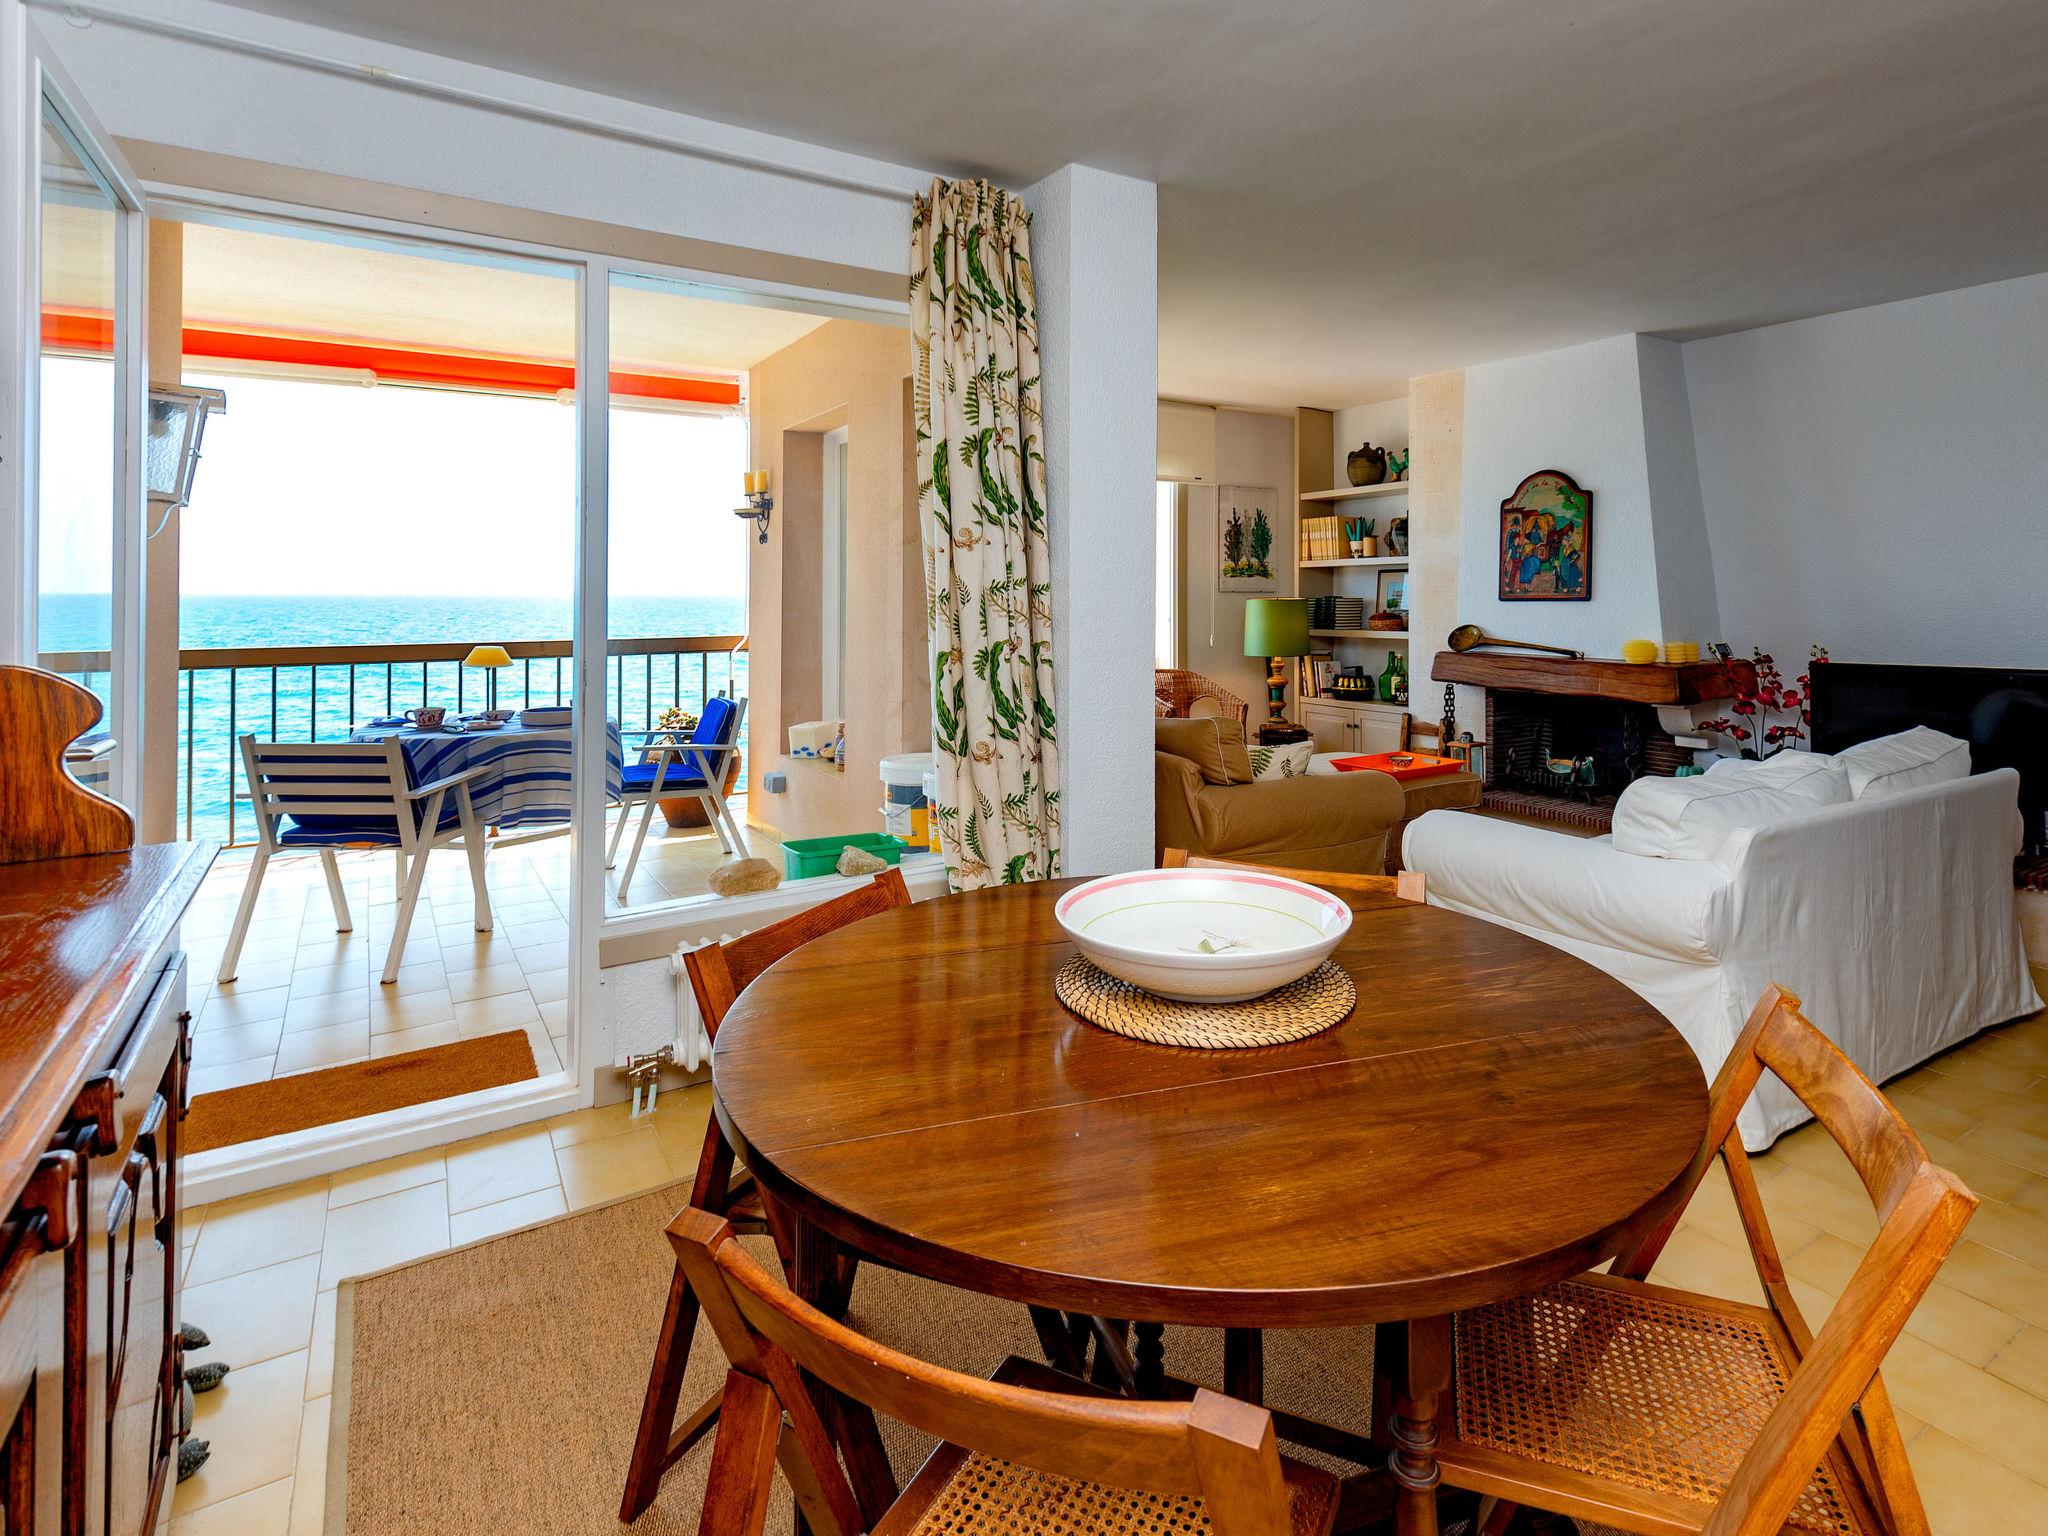 Photo 6 - Appartement de 3 chambres à Sant Andreu de Llavaneres avec piscine et vues à la mer